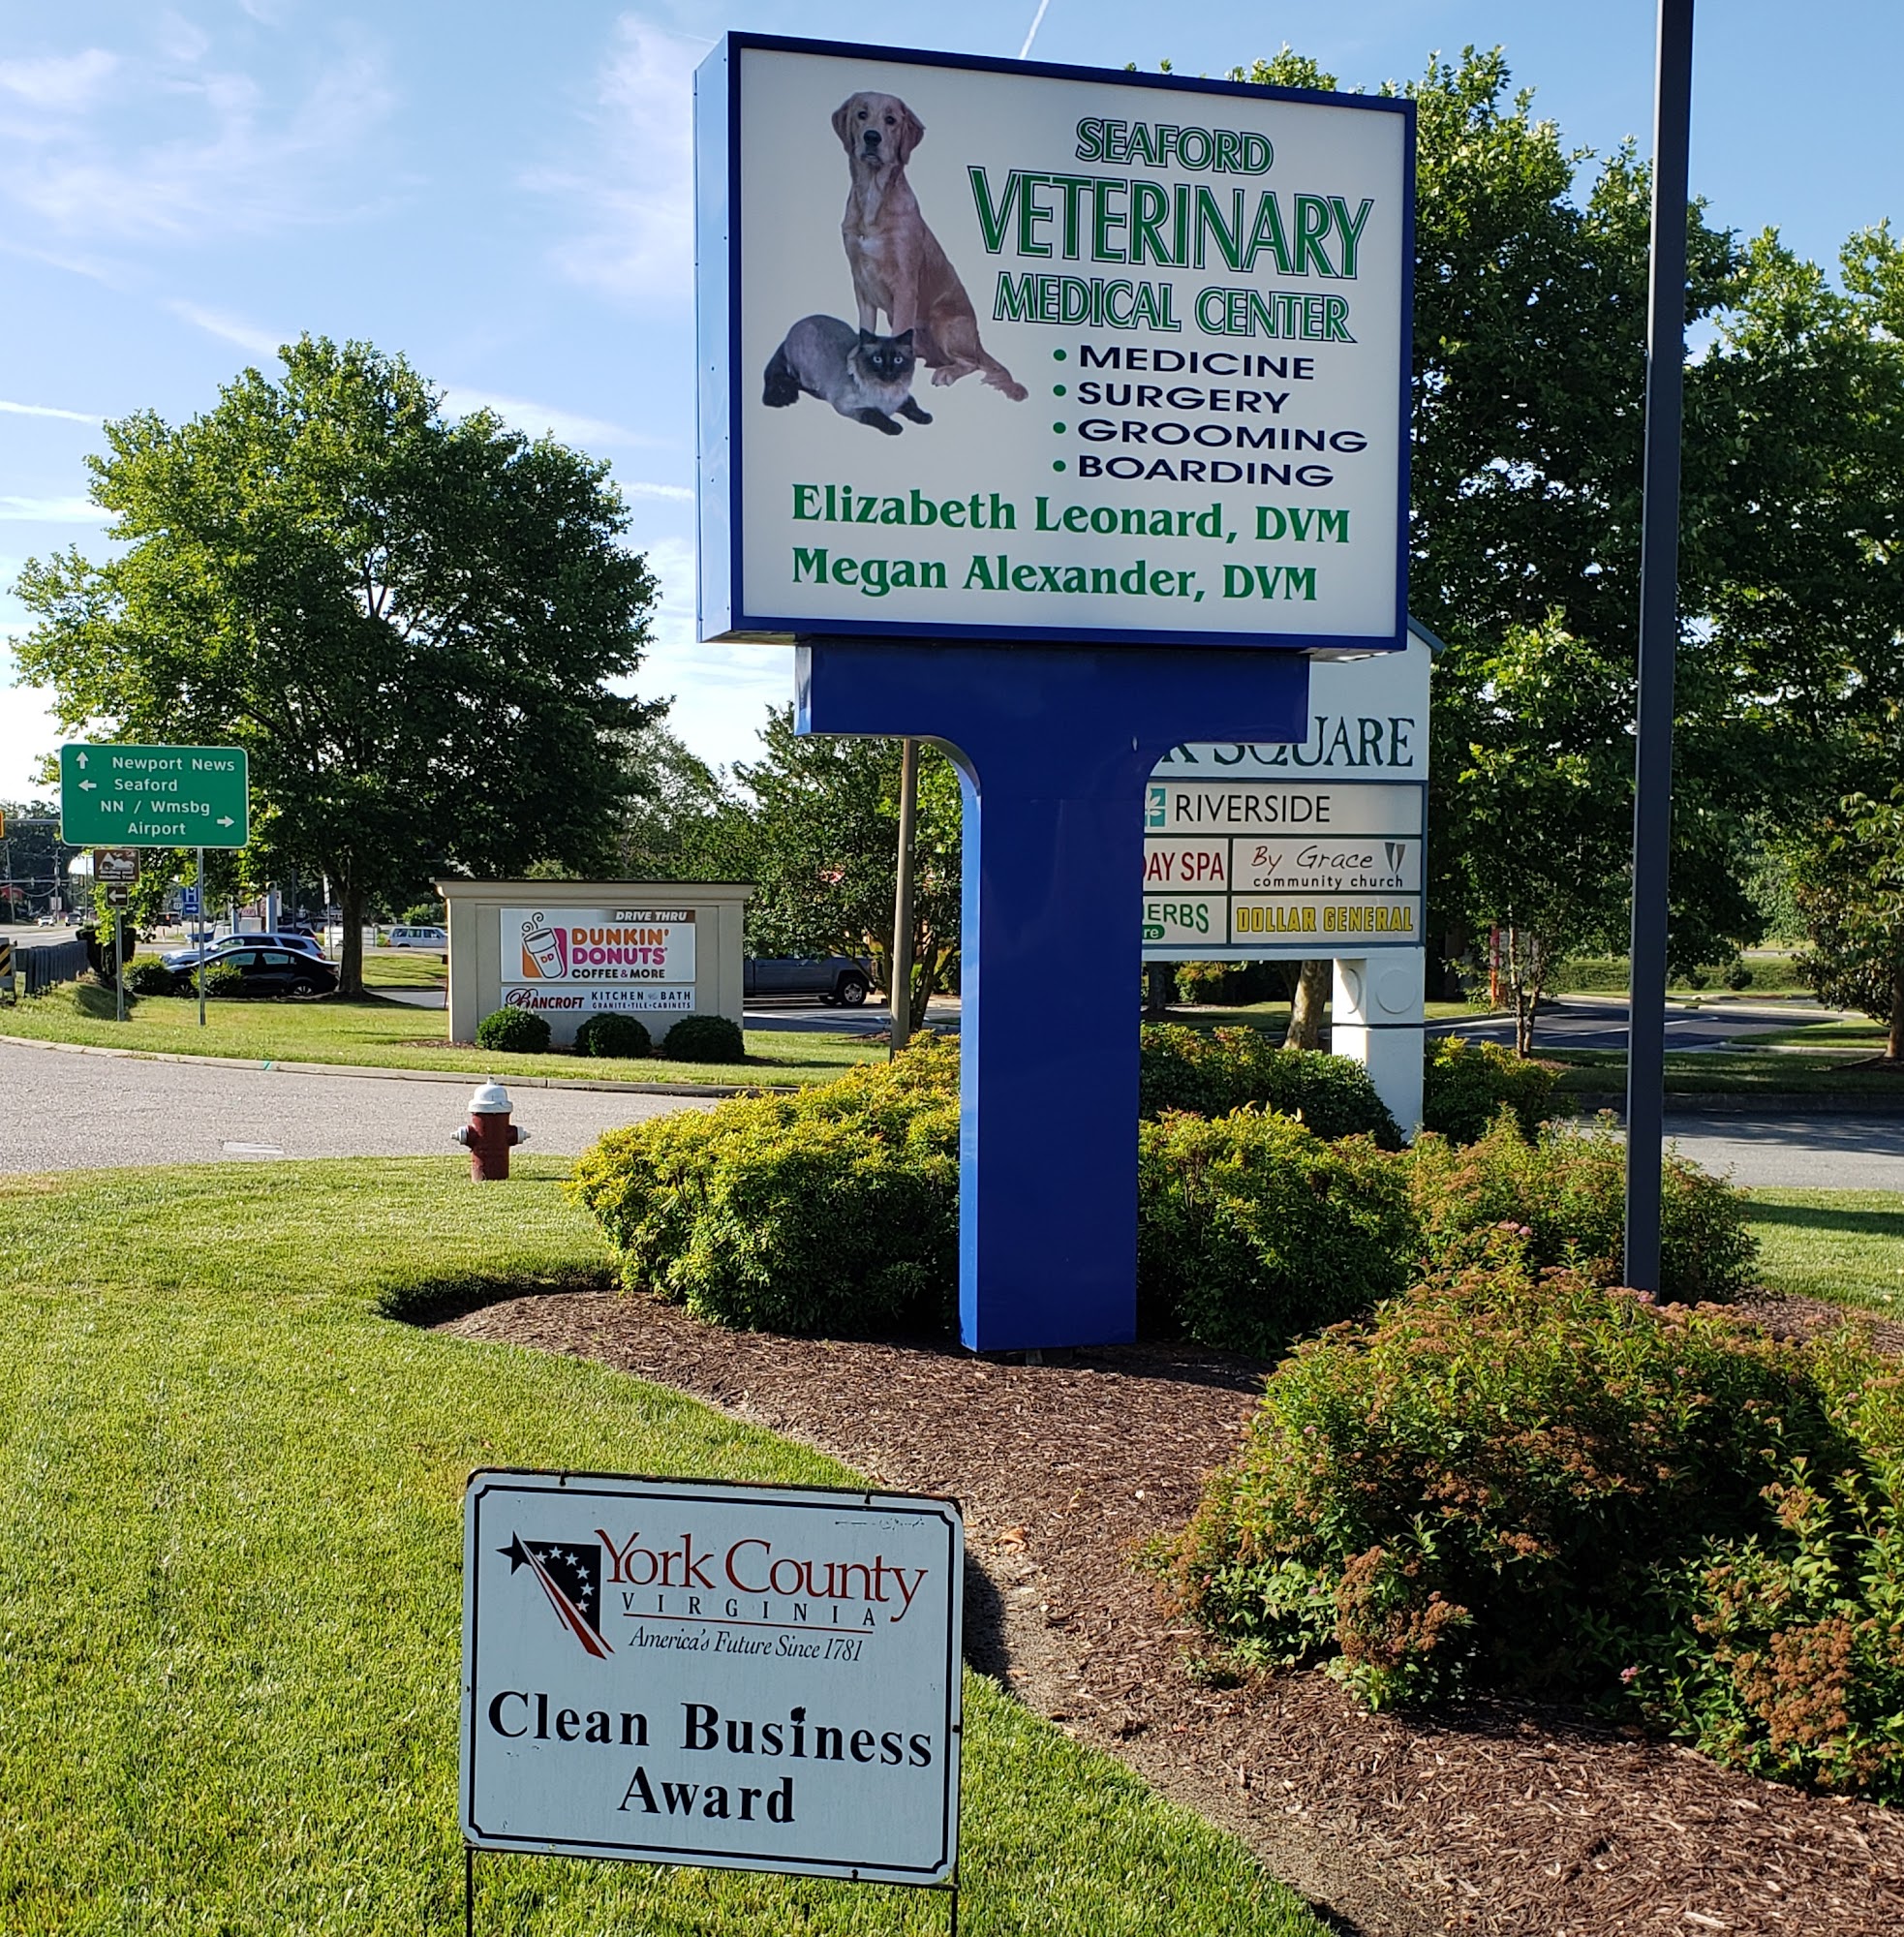 Seaford Veterinary Medical Center